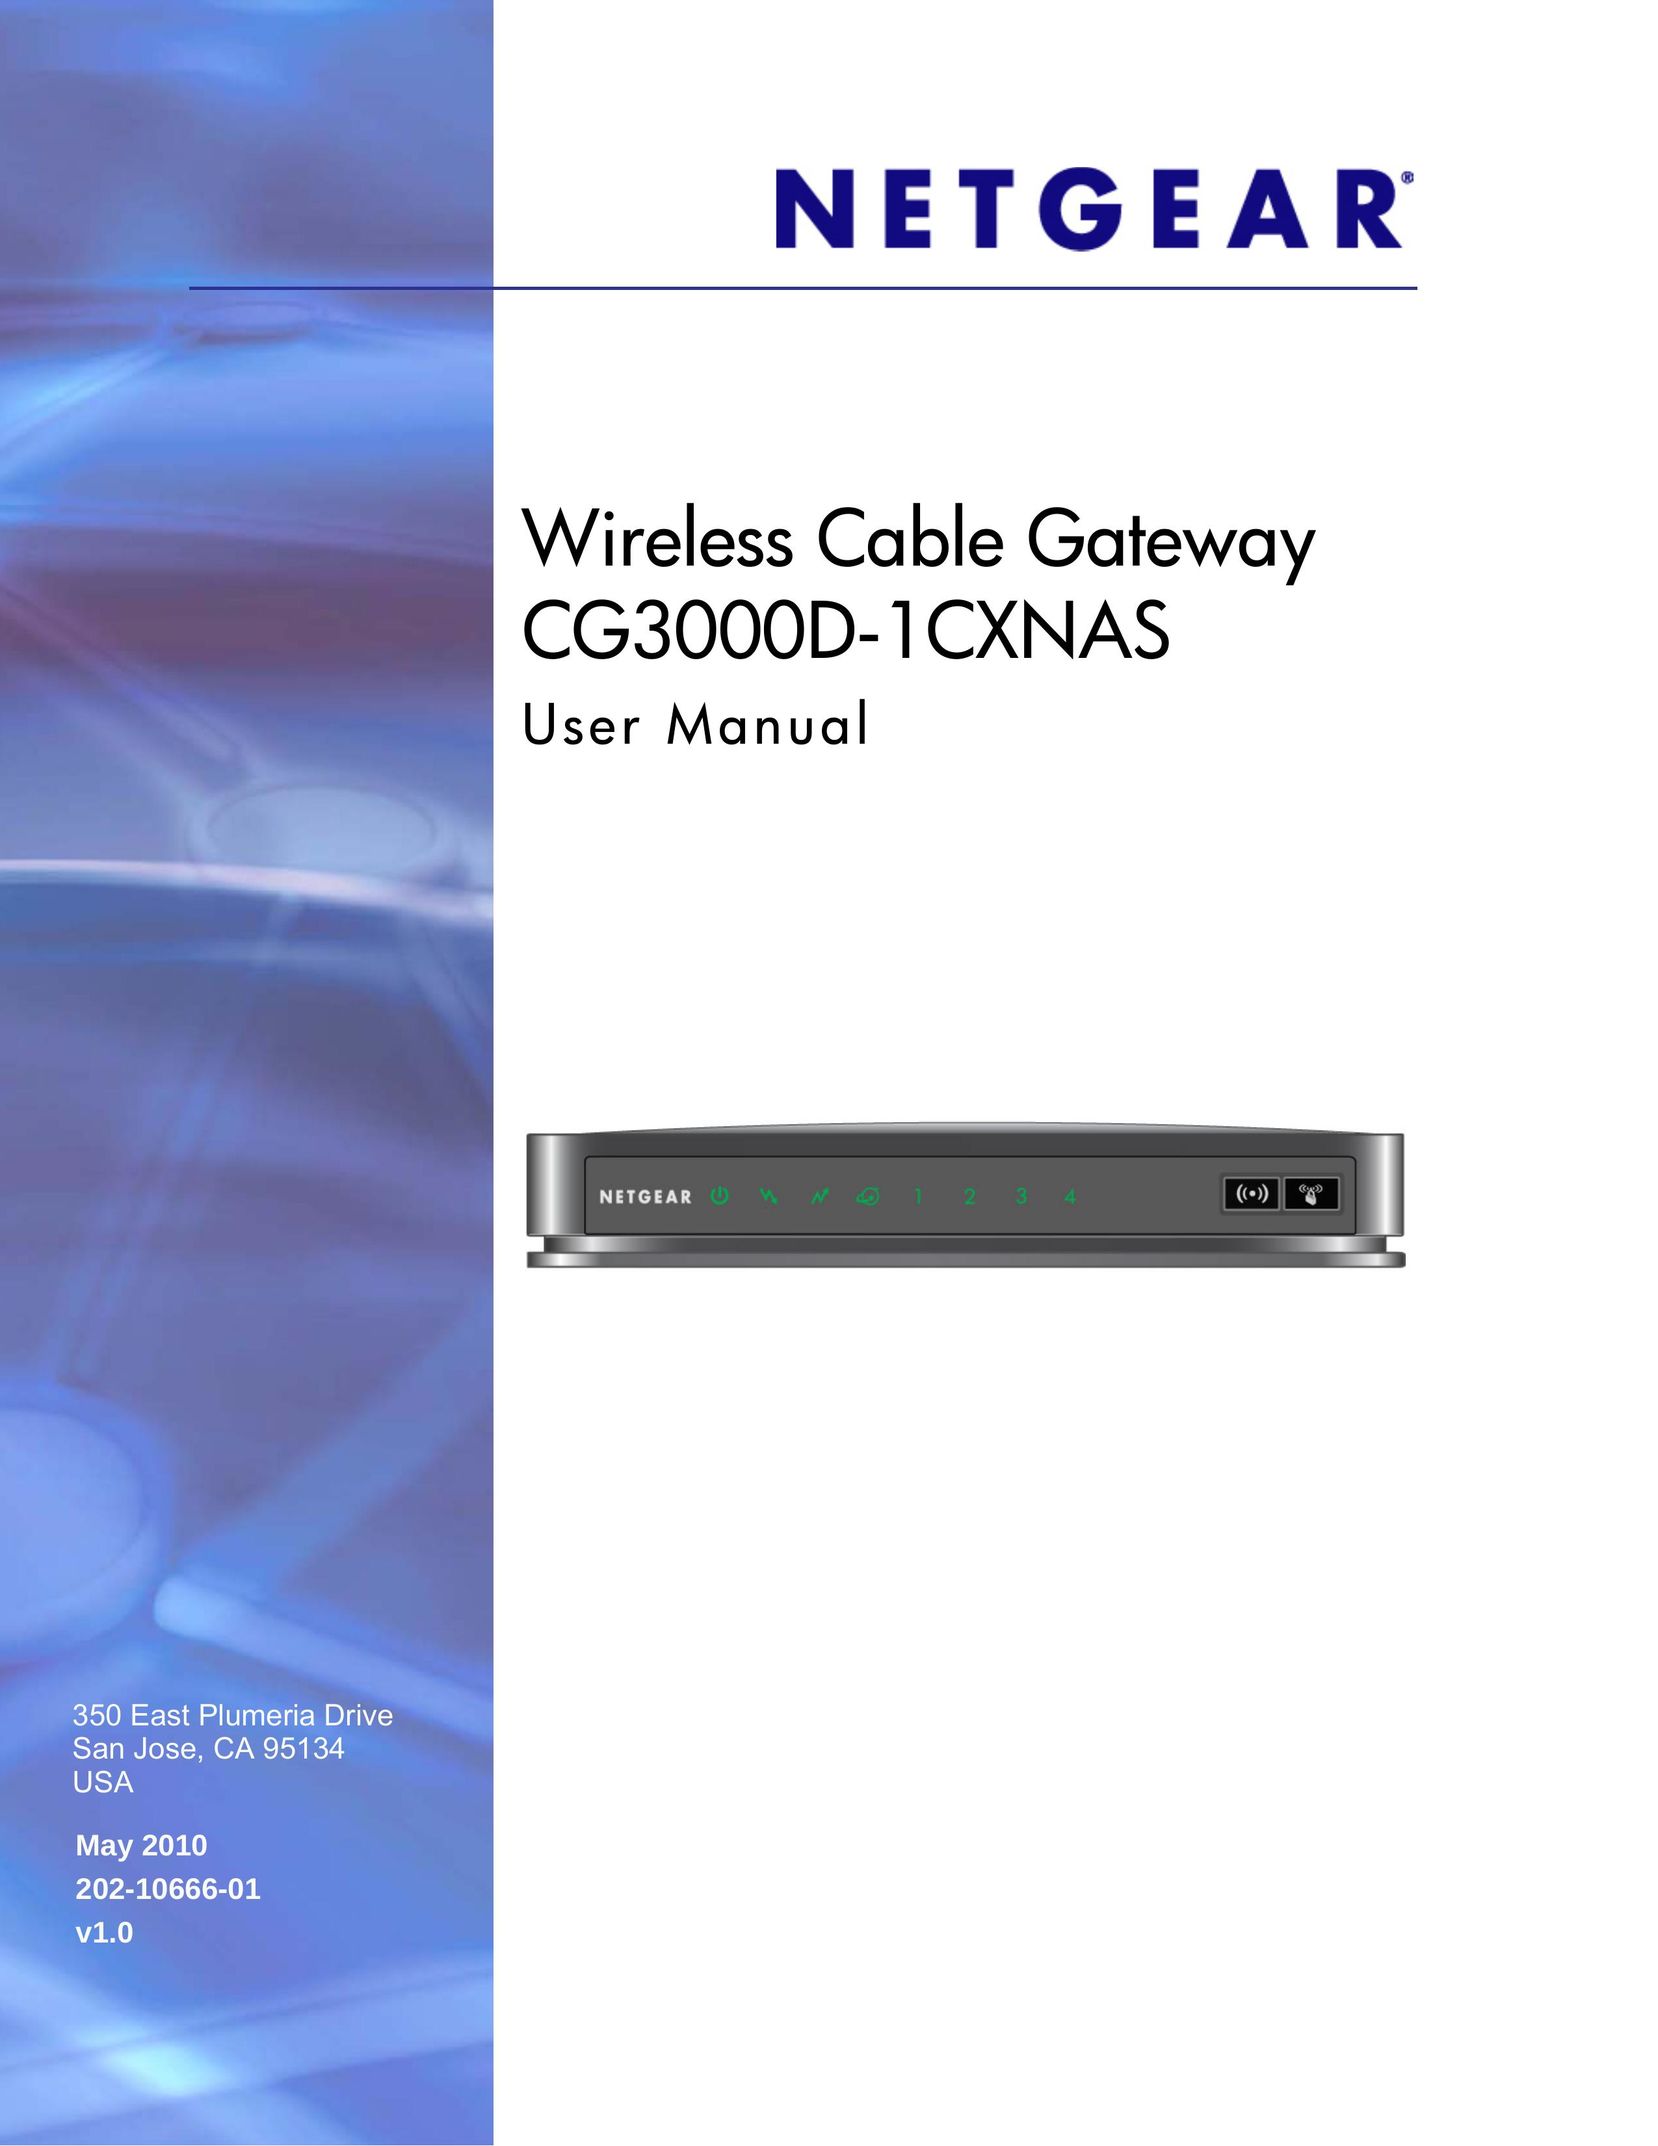 Gateway CG3000D-1CXNAS Network Router User Manual